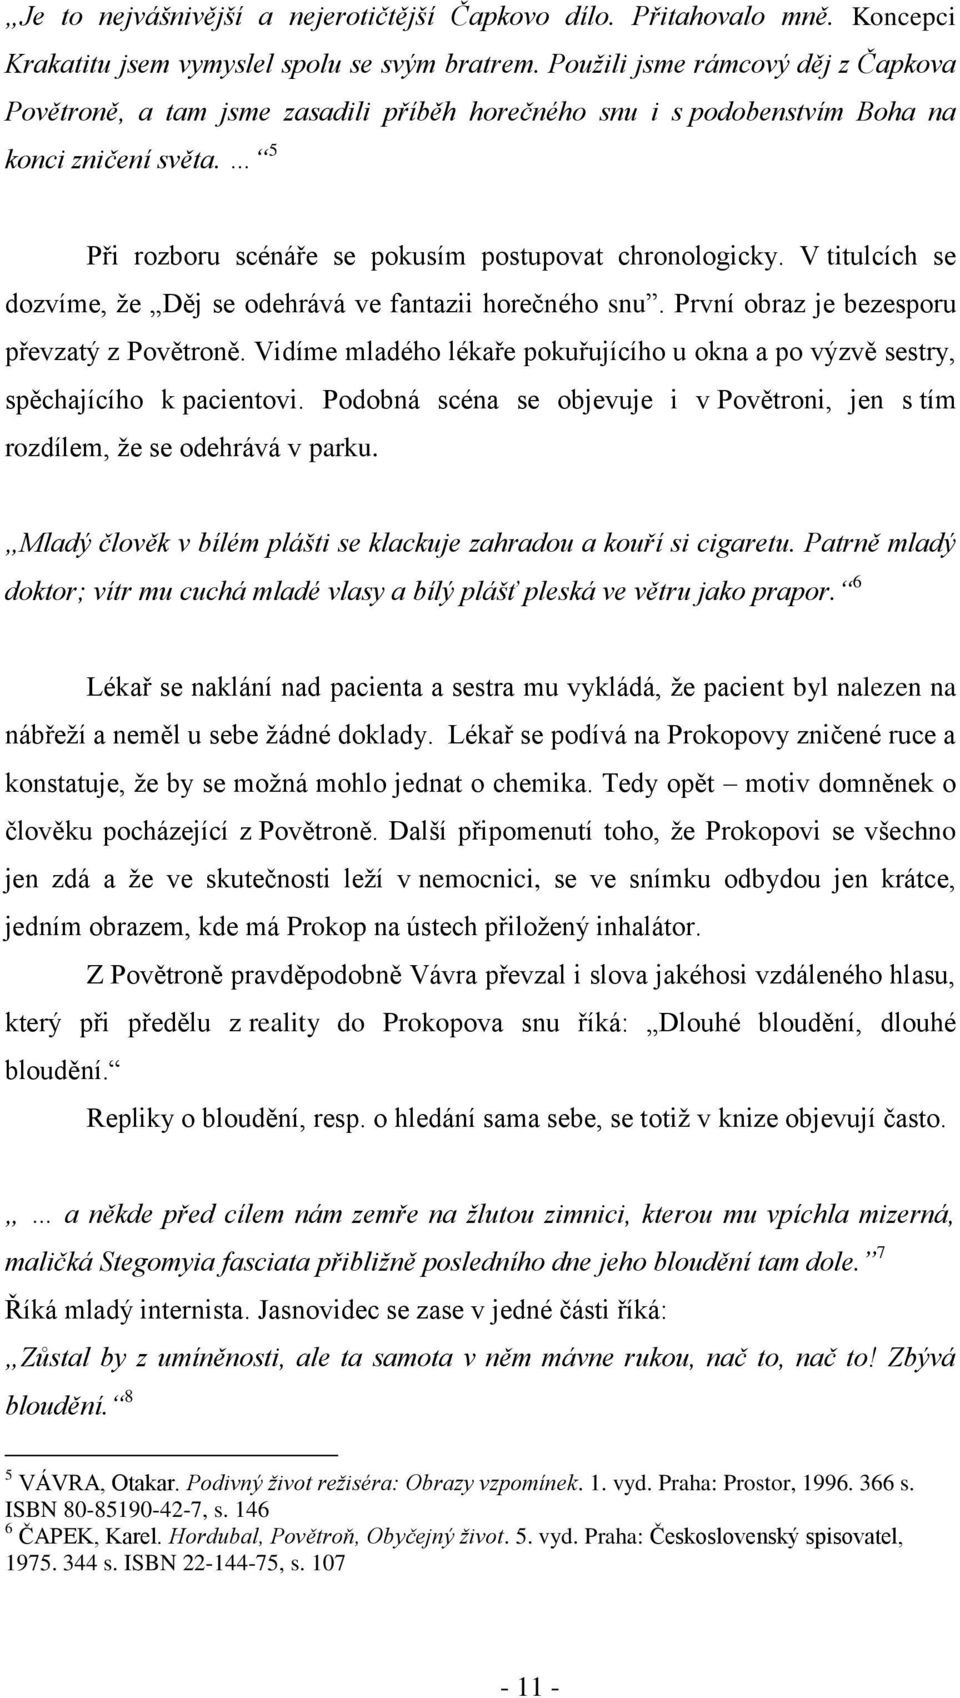 Adaptátor Otakar Vávra - PDF Free Download